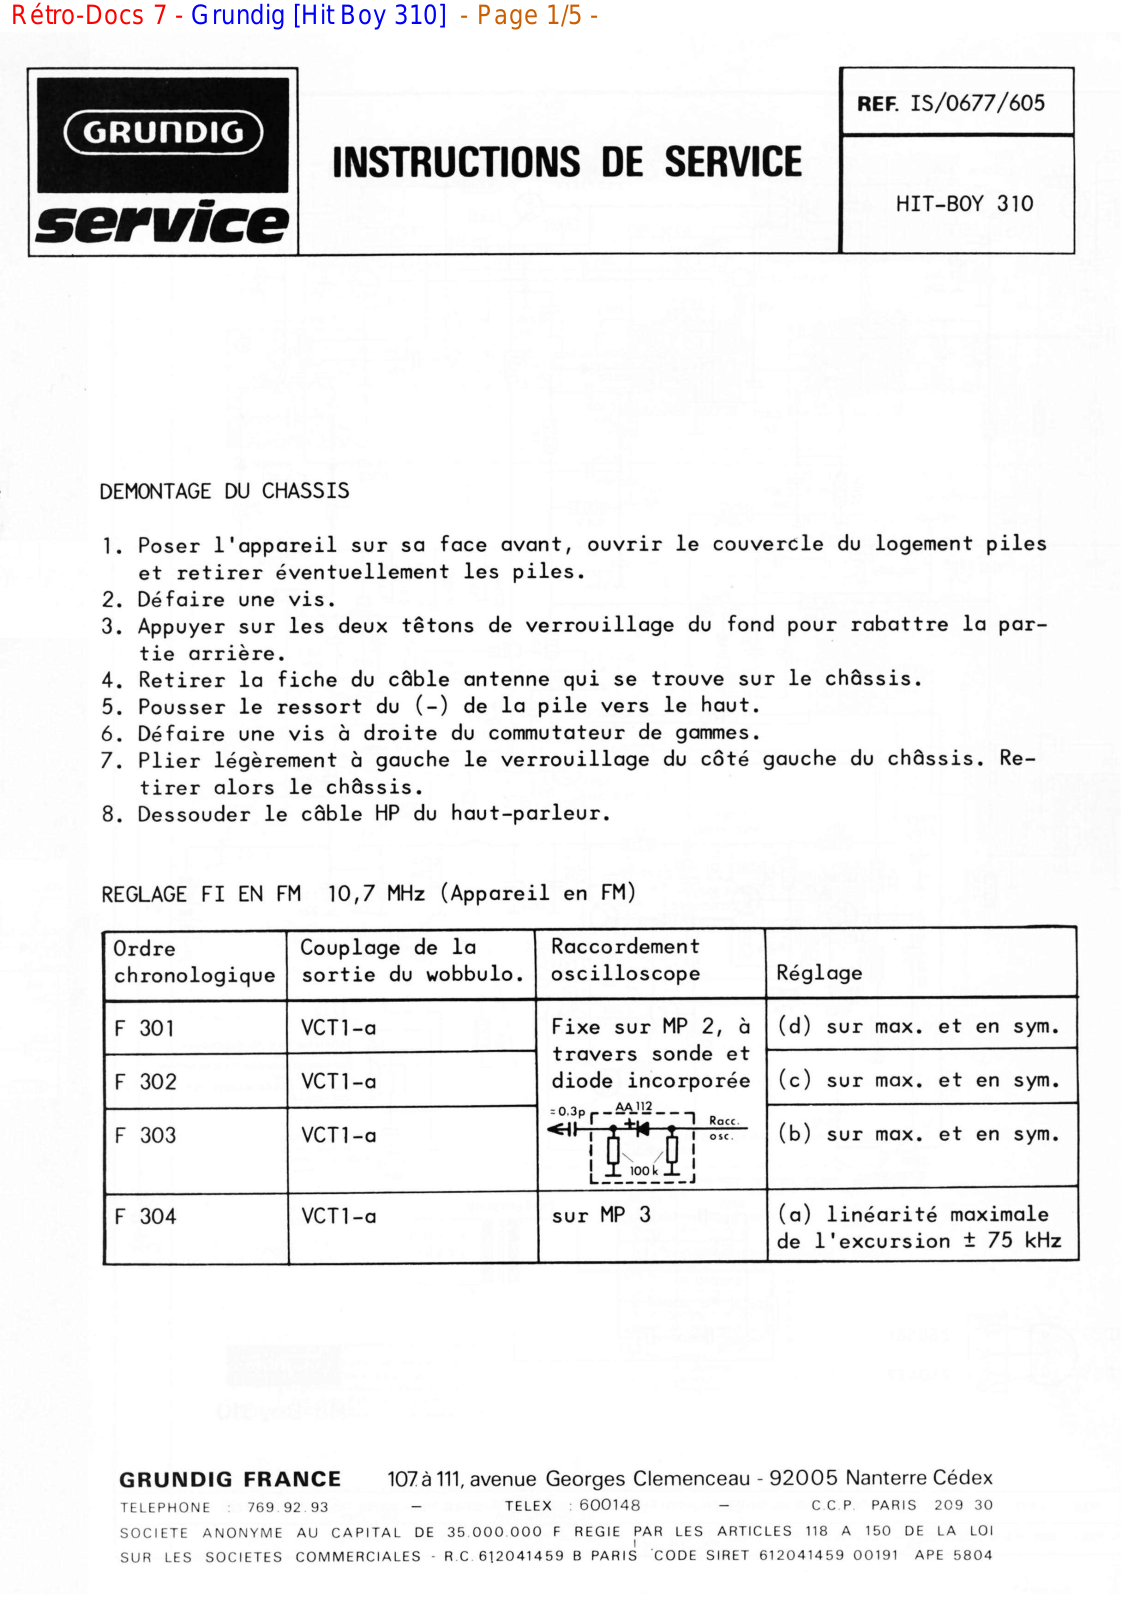 Grundig Hit-Boy-310 Service Manual